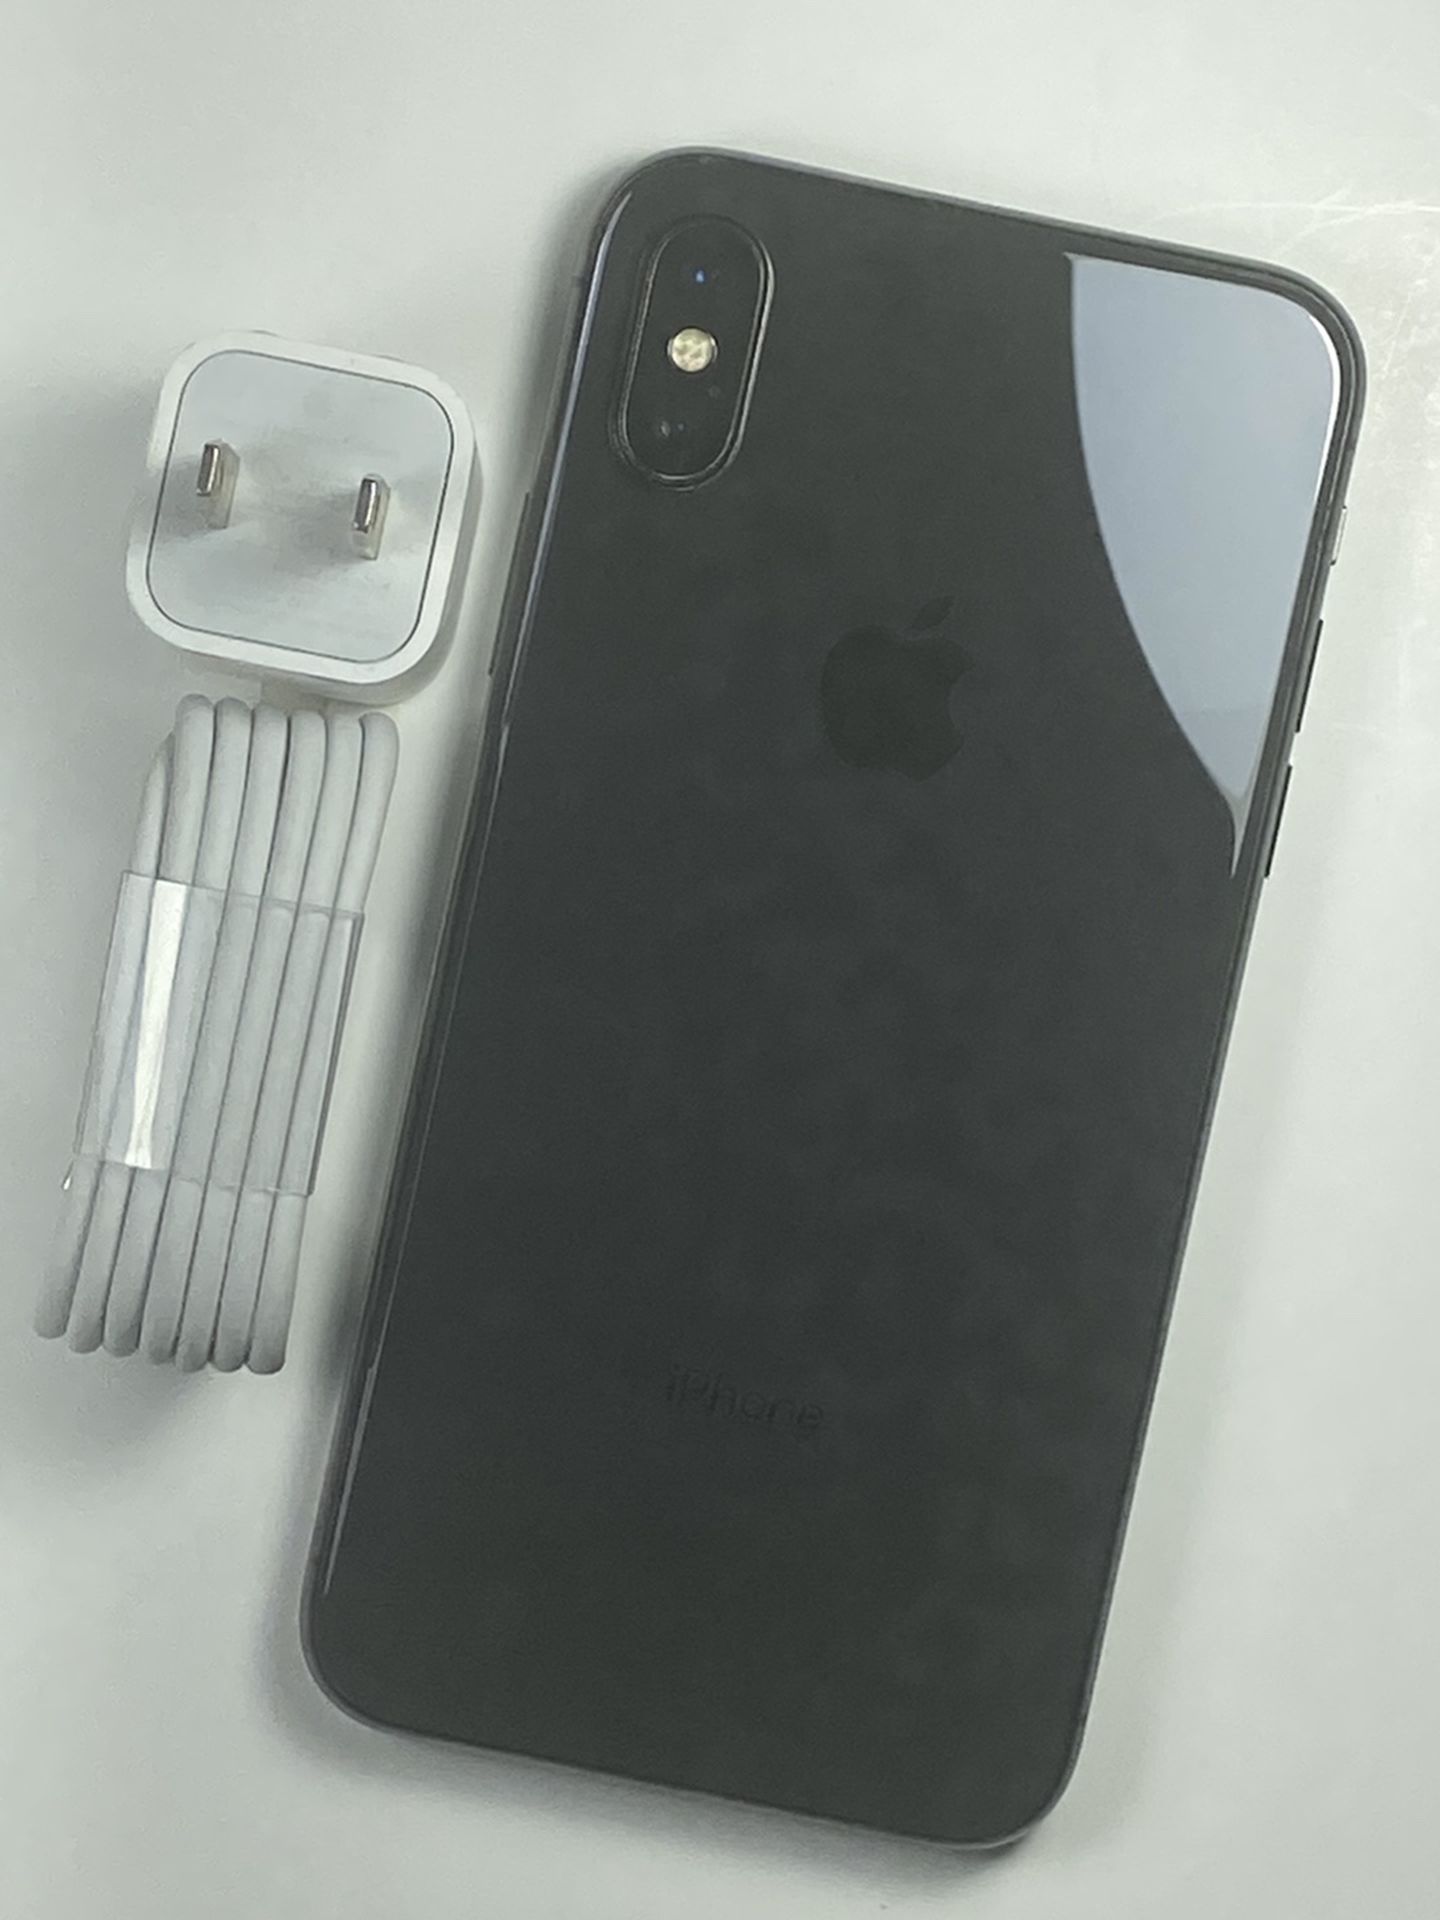 Apple iPhone X - 64GB - Space Gray (Unlocked) A1901 (GSM) (CA)1218AM92